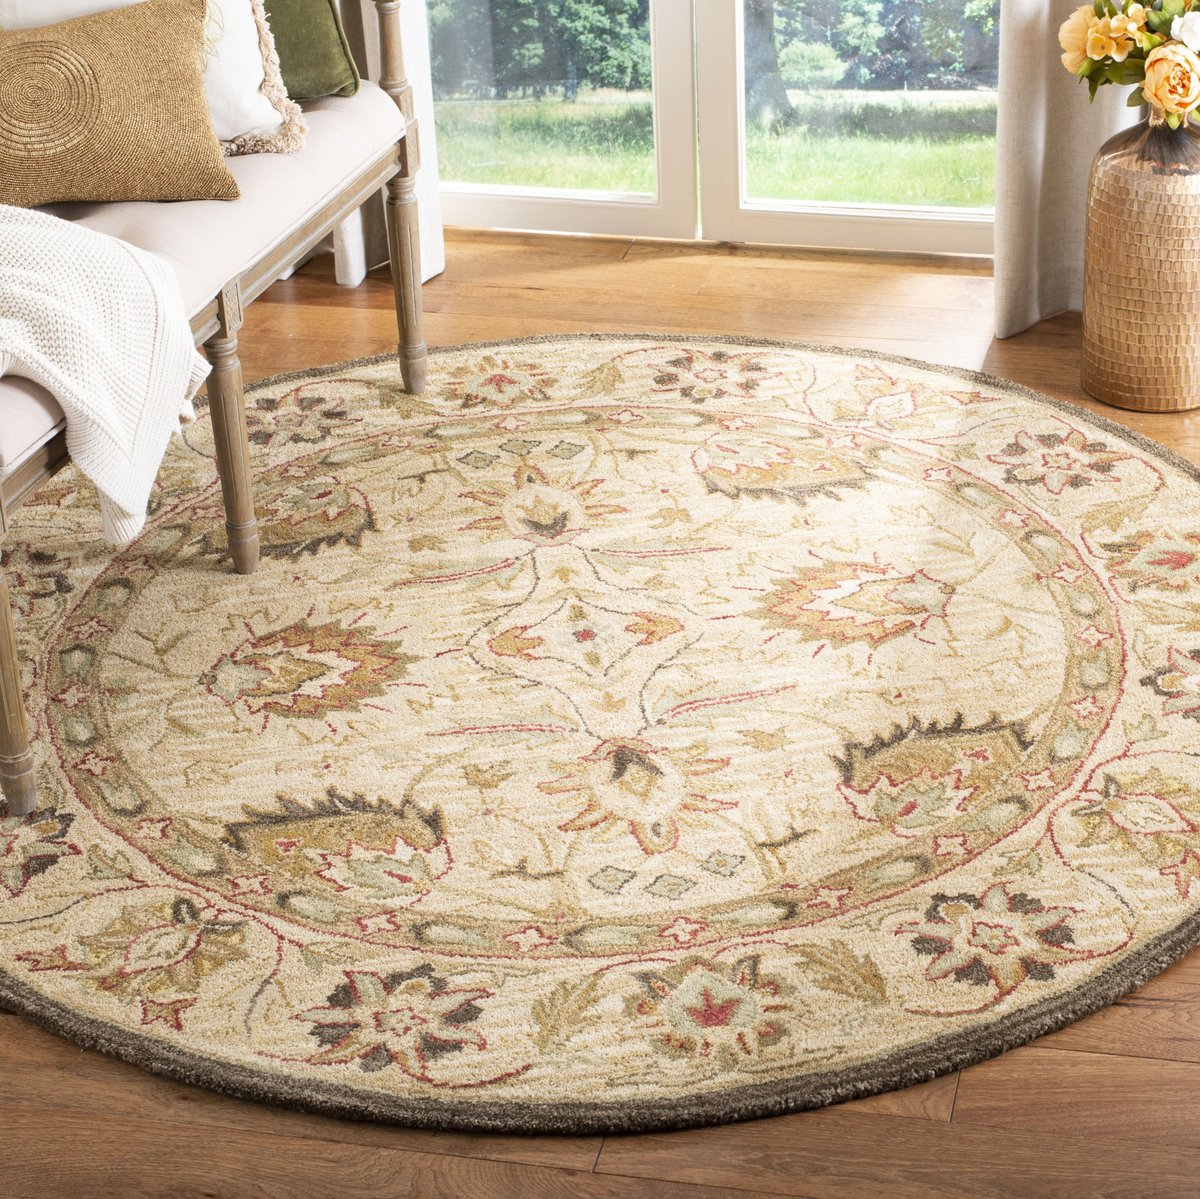 Victorian European Country Traditional Floral Floor Mat Area Rug Carpet Beige U 